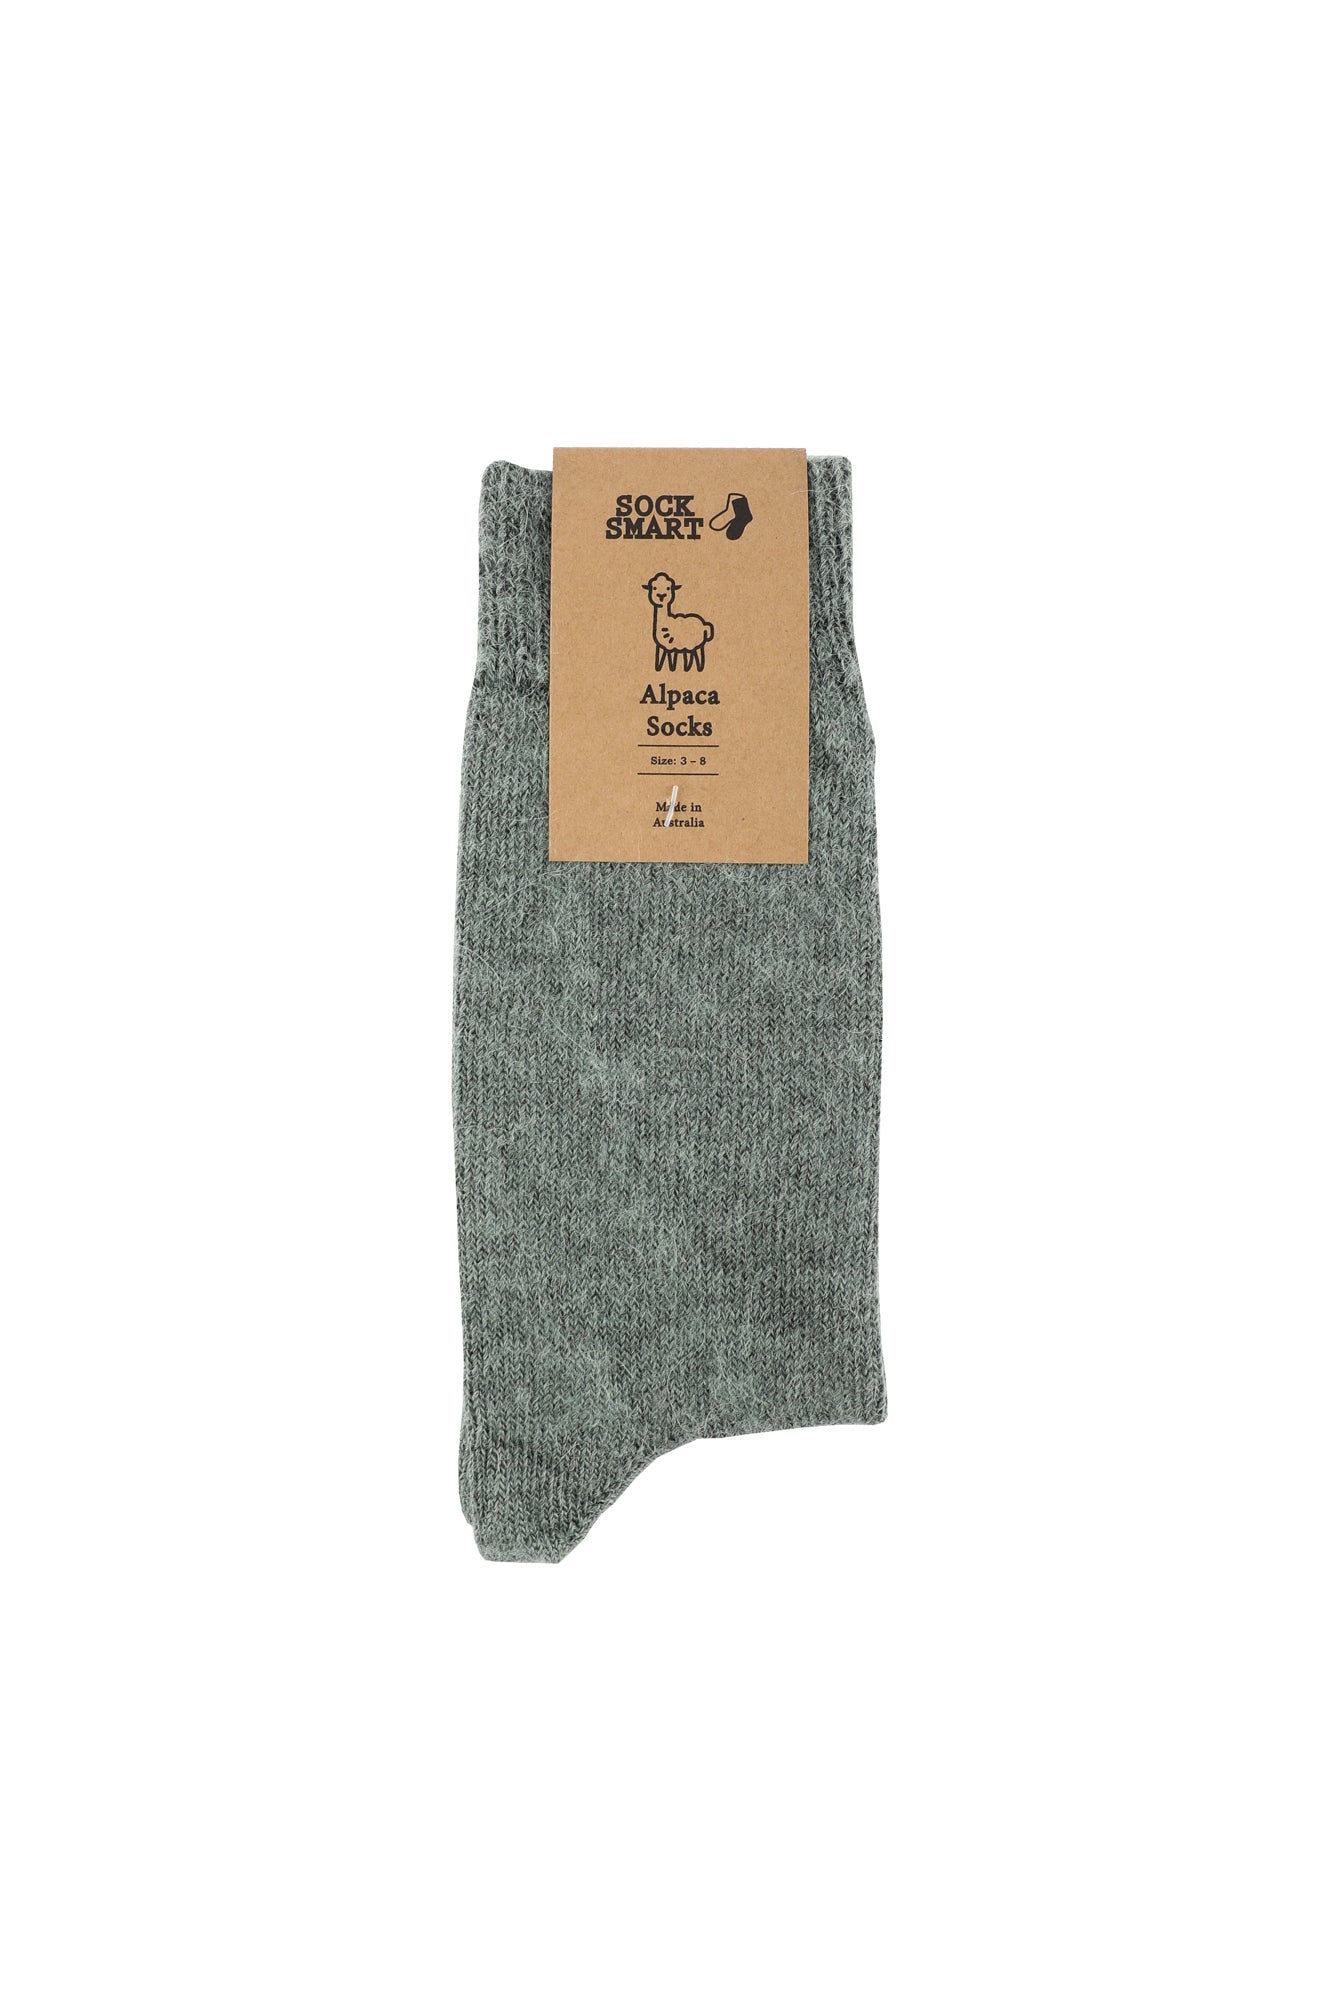 Australian-Made Alpaca Wool Socks